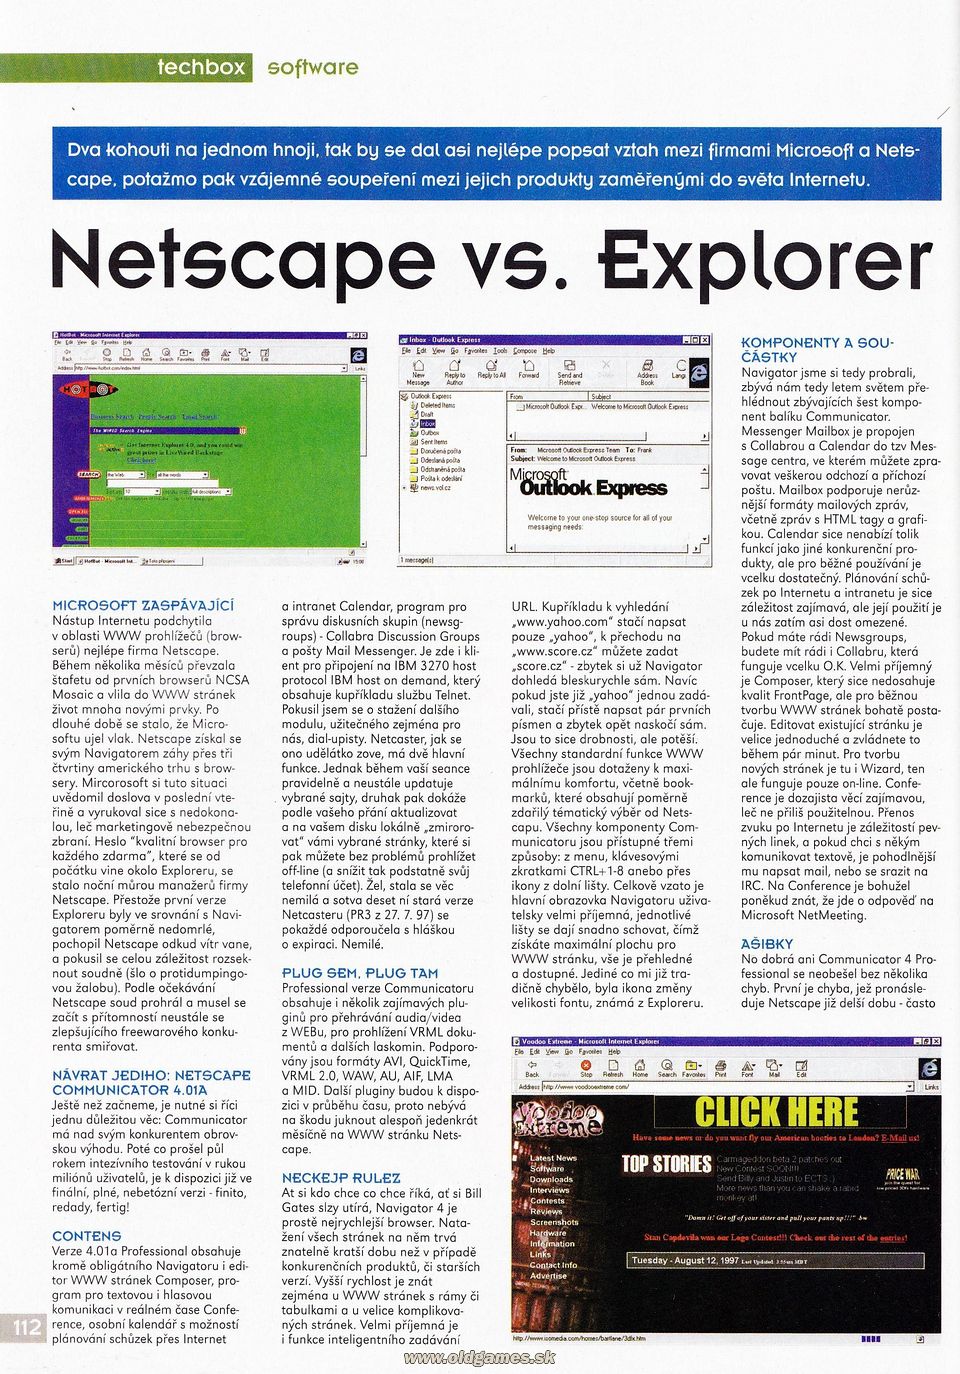 Netscape vs. Explorer